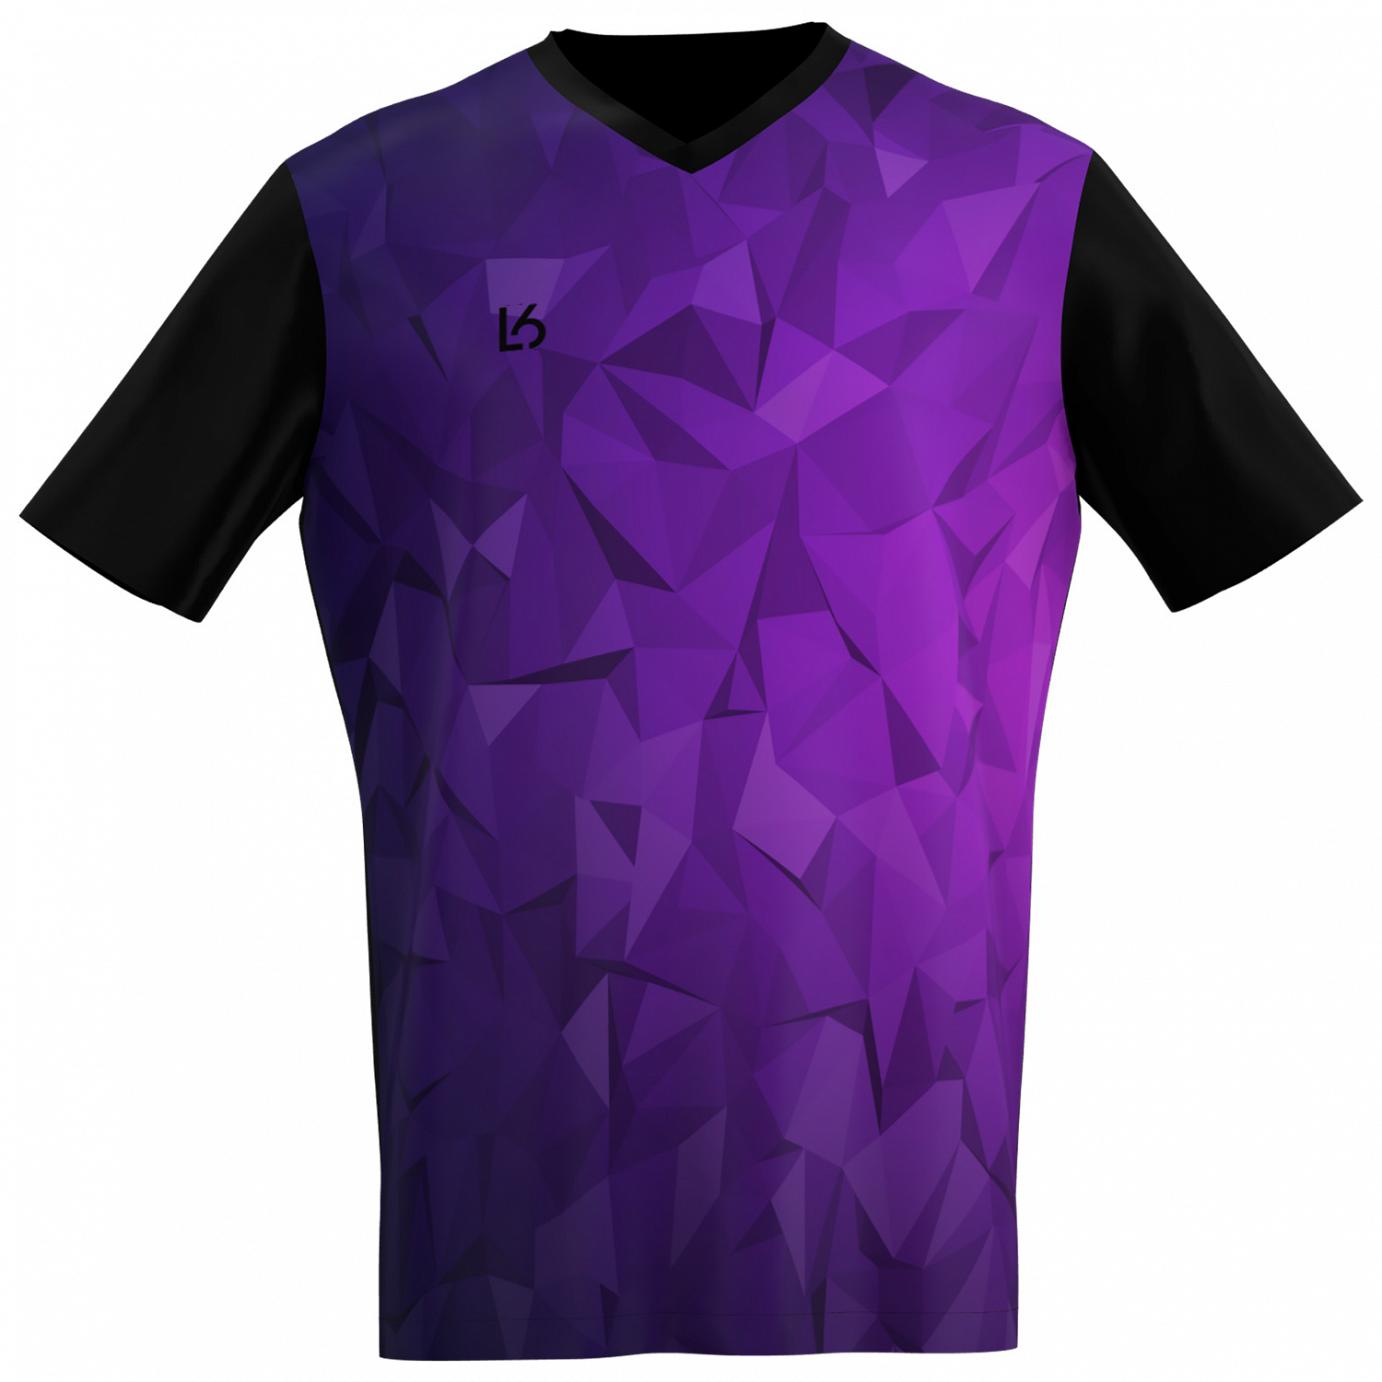 L6 V-Neck Trikot - Polygon Purple - Badminton Shop Franken